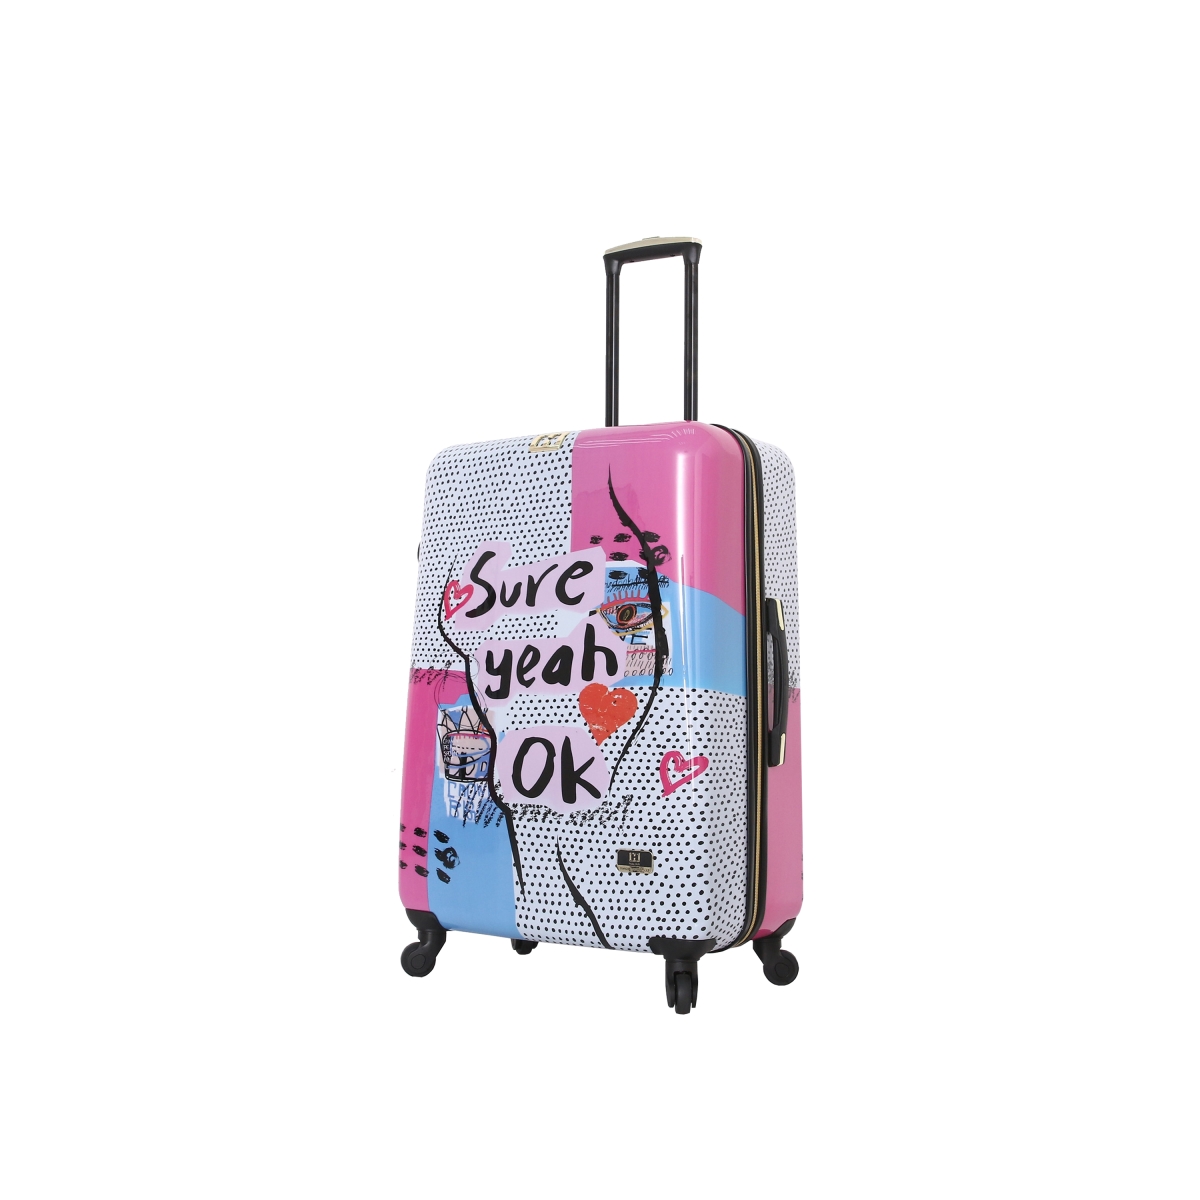 H1009-28-nsunn 28 In. Nikki Chu Sure Cute Luggage, Multicolor